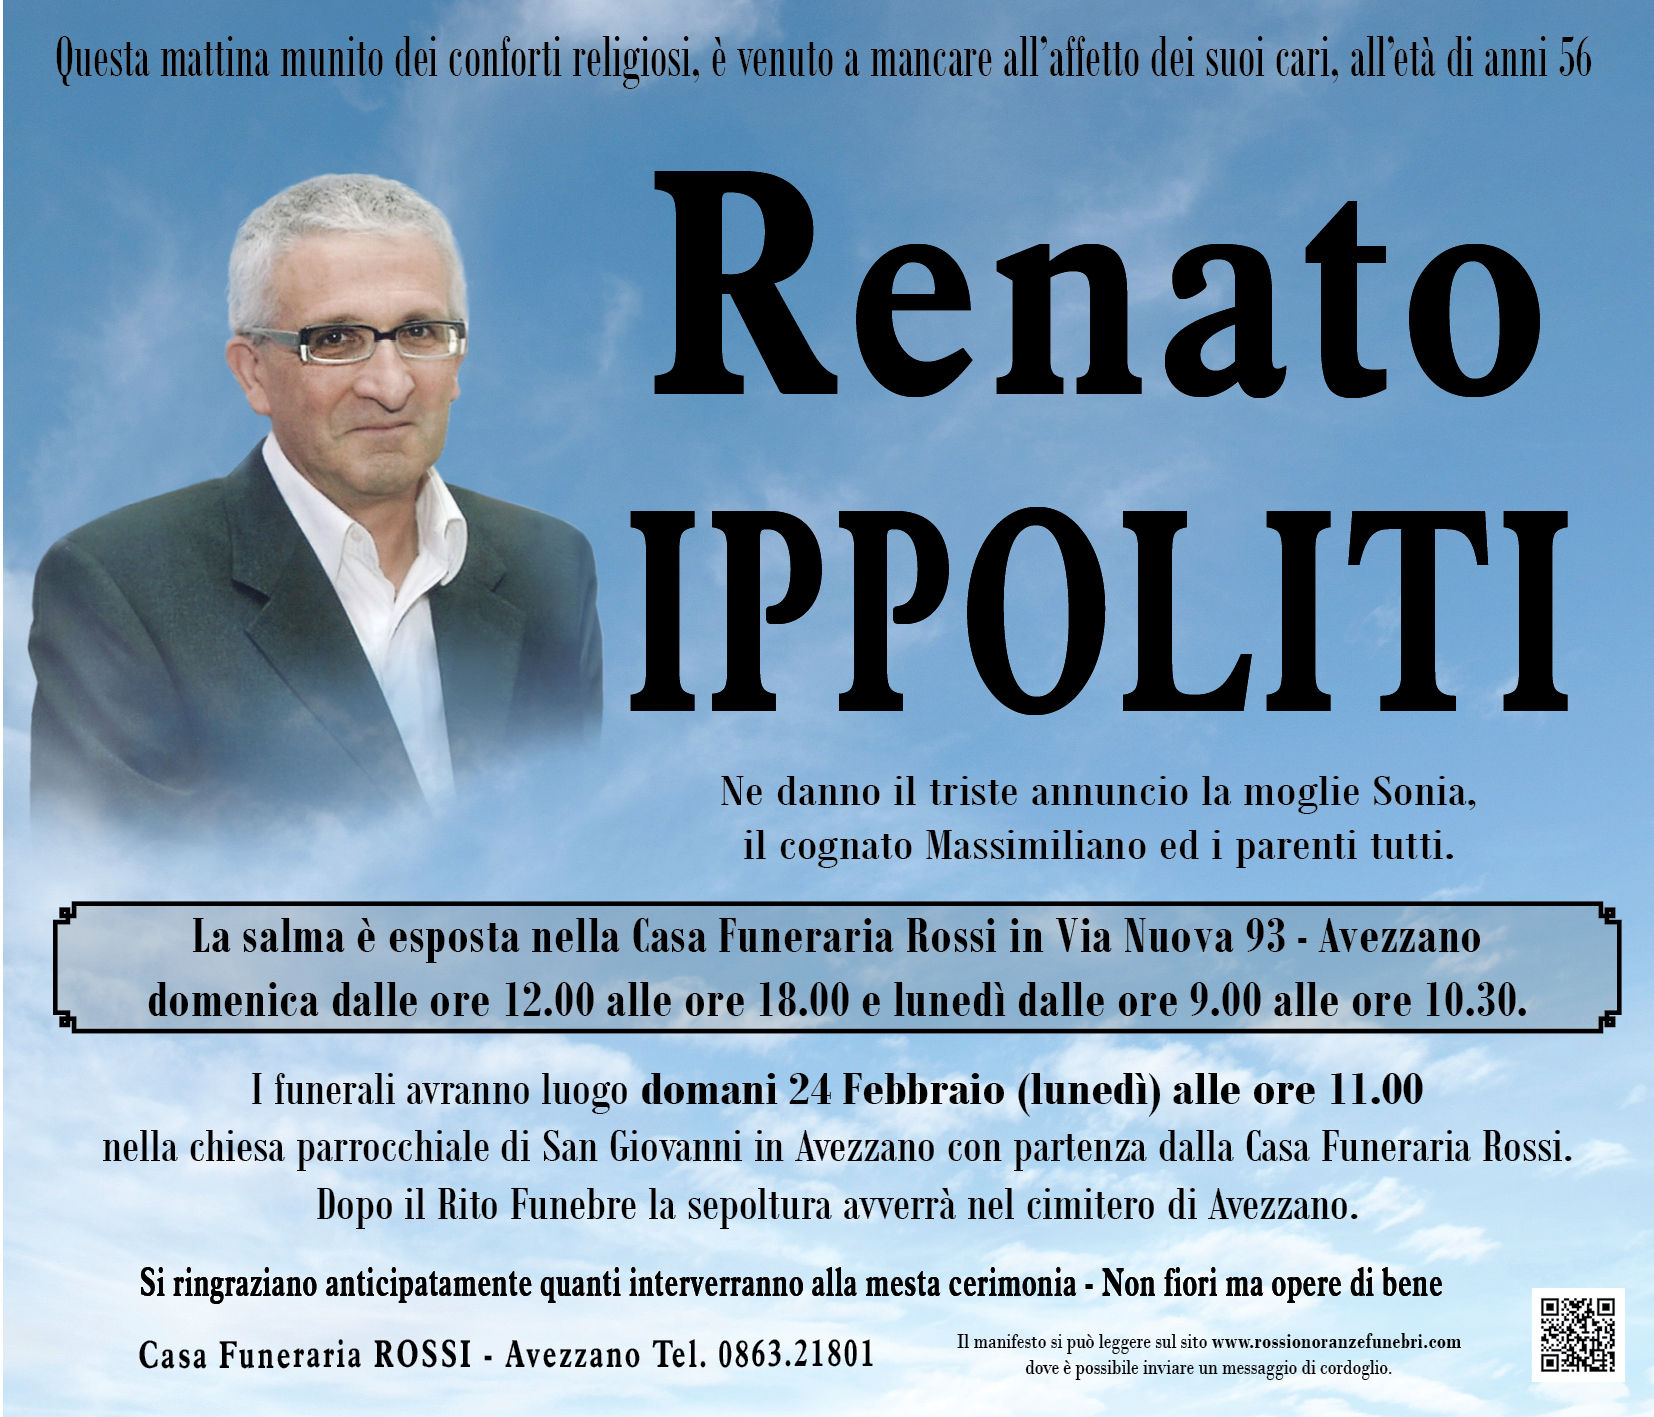 Renato Ippoliti